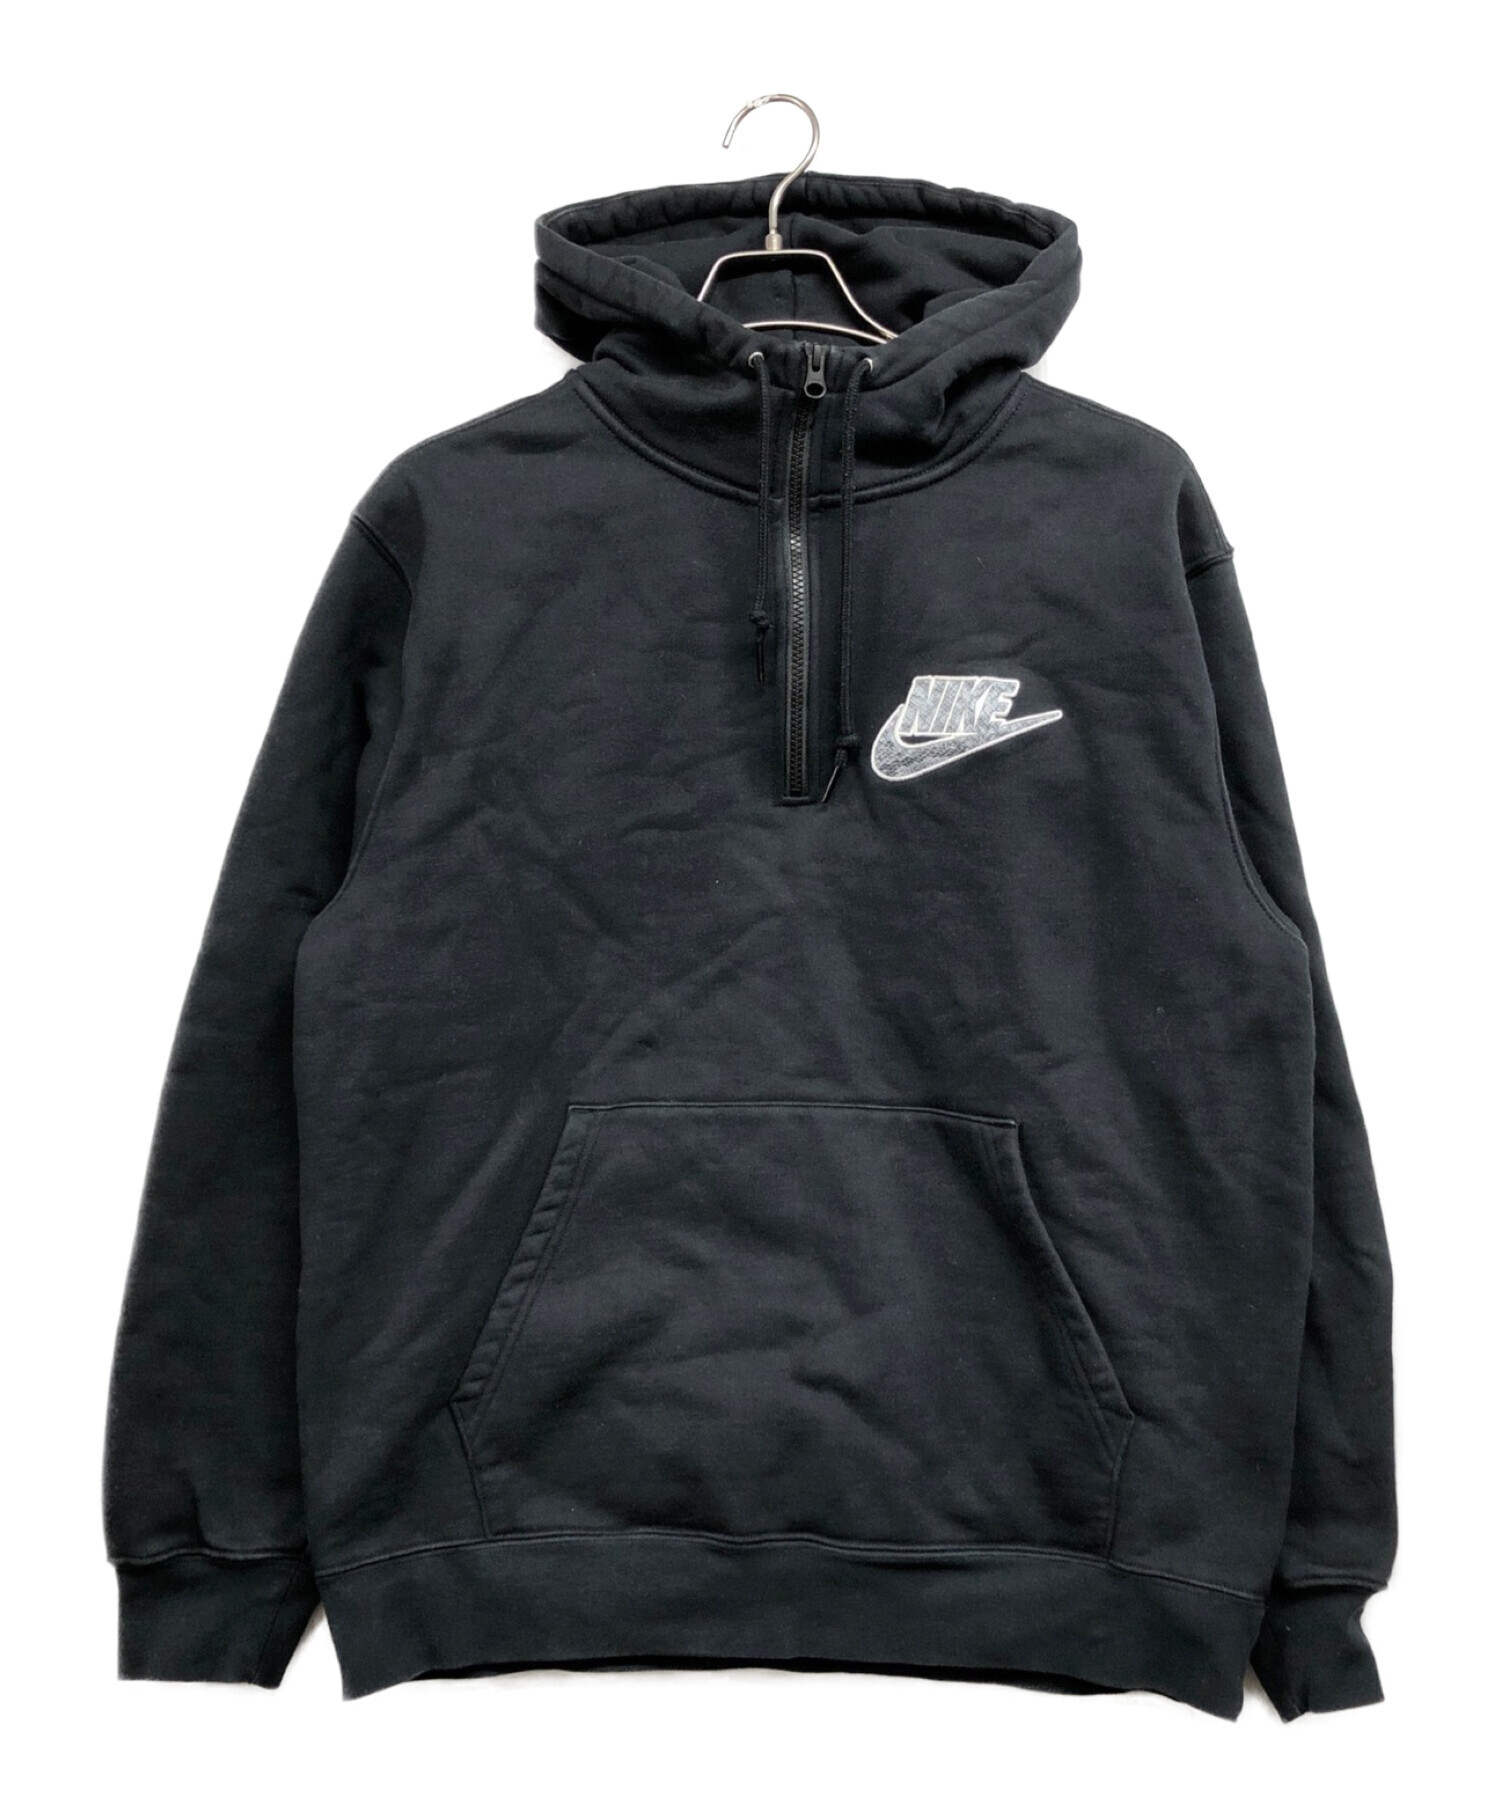 Supreme (シュプリーム) NIKE (ナイキ) 21SS Half Zip Hooded Sweatshirt ブラック サイズ:M